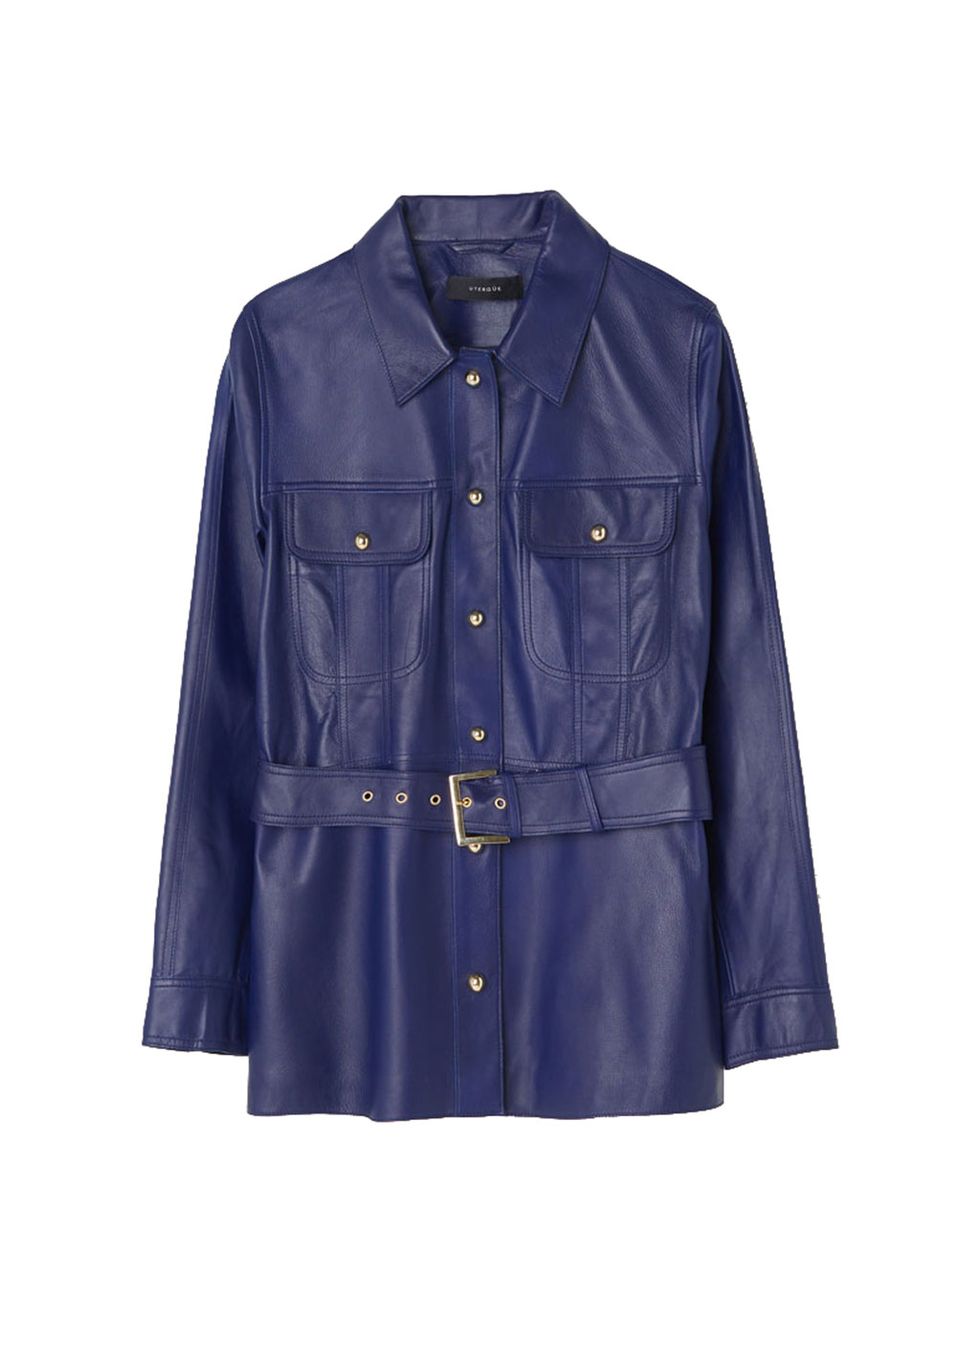 Clothing, Blue, Outerwear, Cobalt blue, Jacket, Denim, Sleeve, Pocket, Electric blue, Button, 